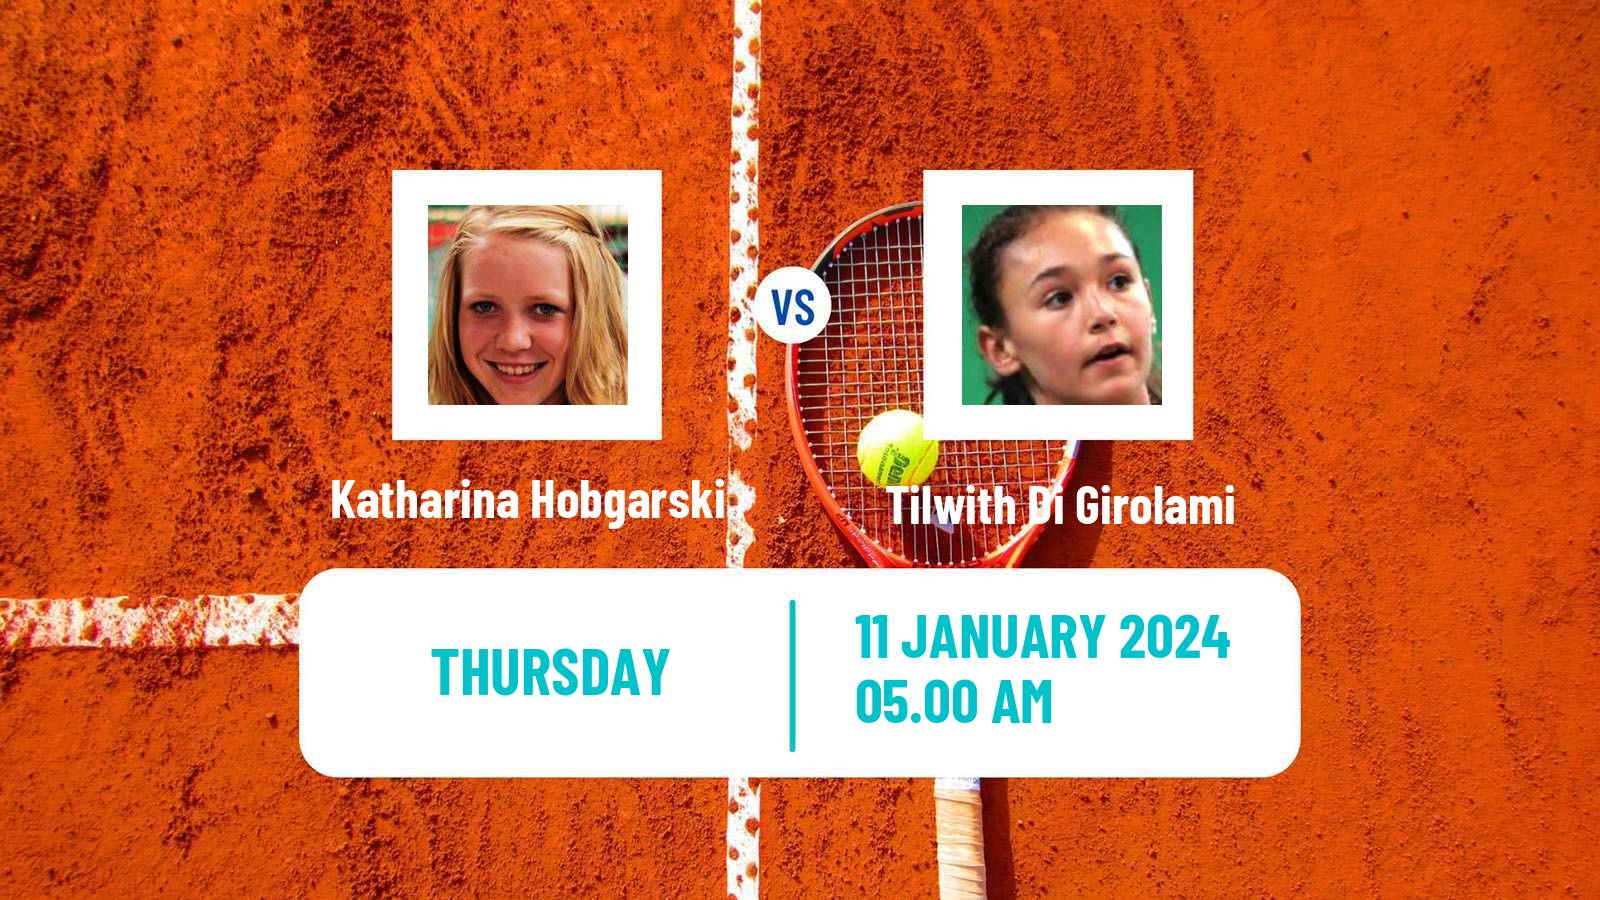 Tennis ITF W15 Esch Alzette Women Katharina Hobgarski - Tilwith Di Girolami